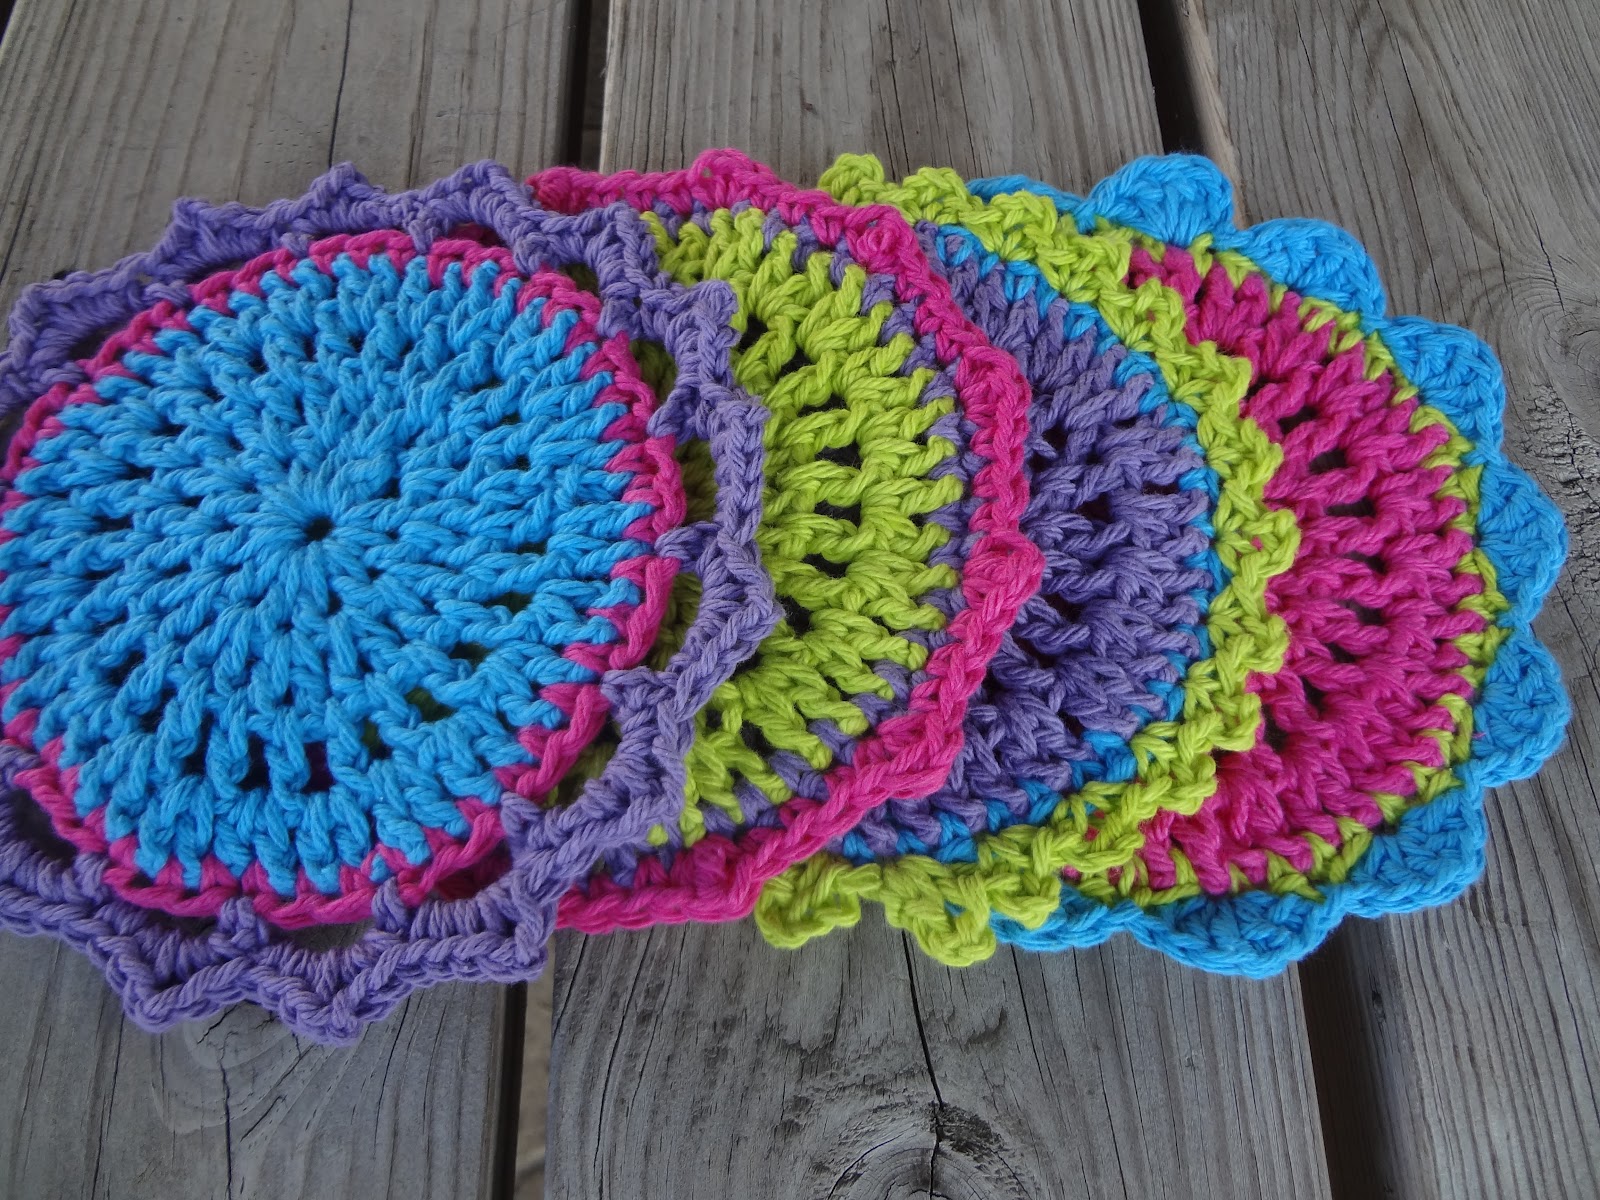 20 Crochet Dishcloth Patterns | Guide Patterns